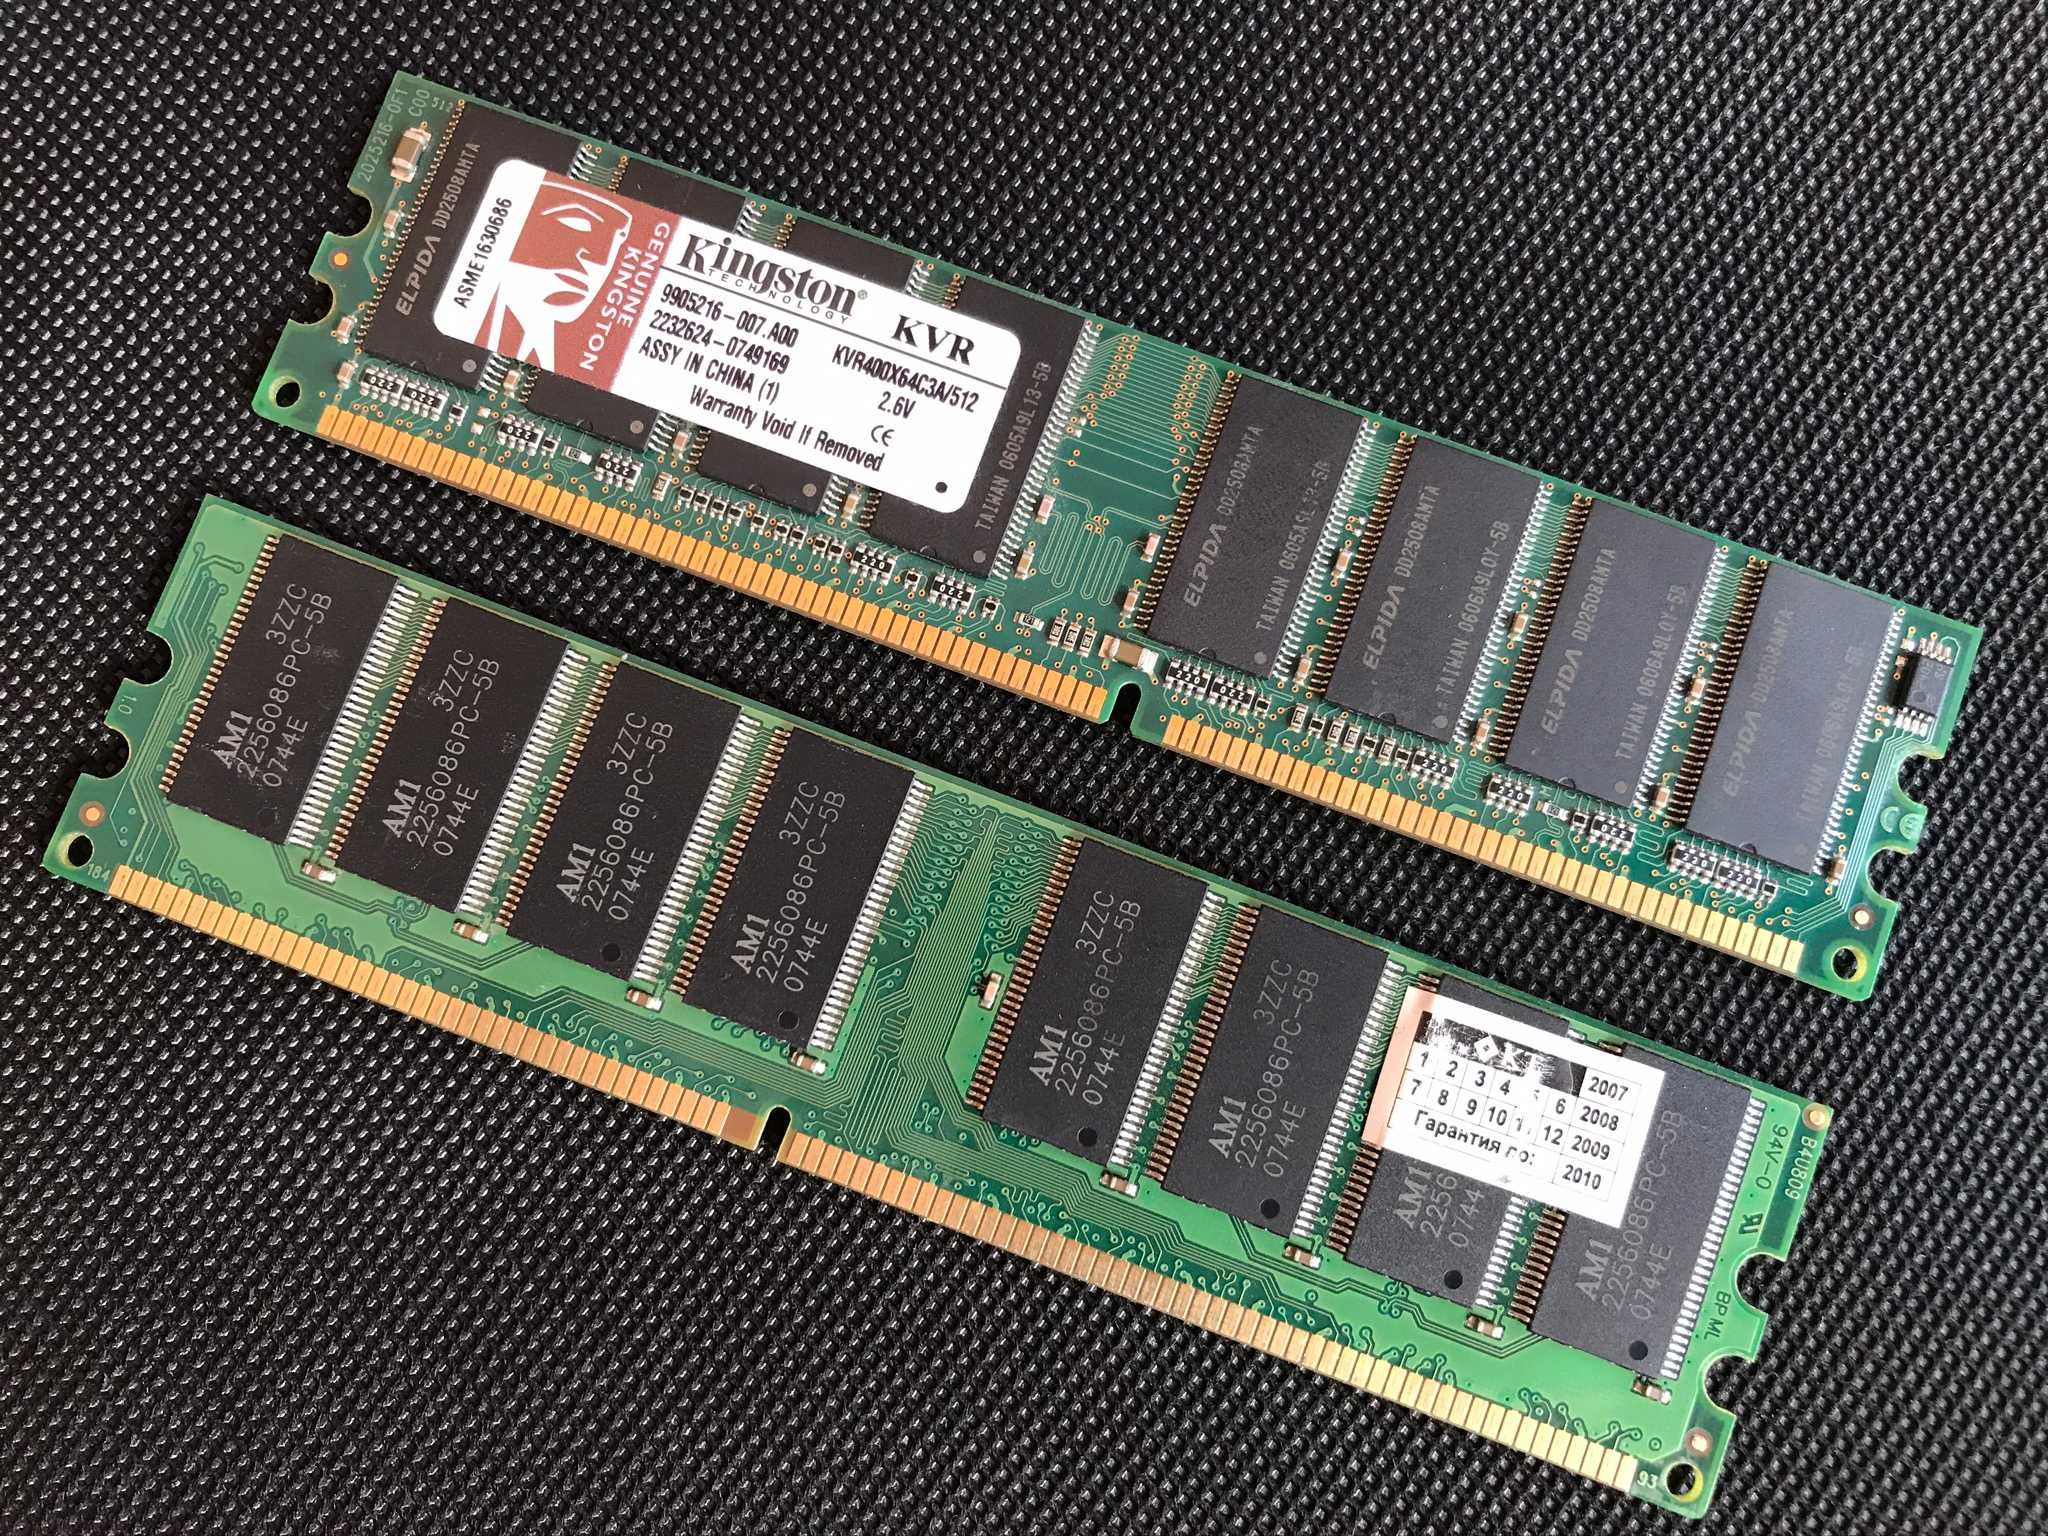 Оперативная память DDR(I) размером 512МБ